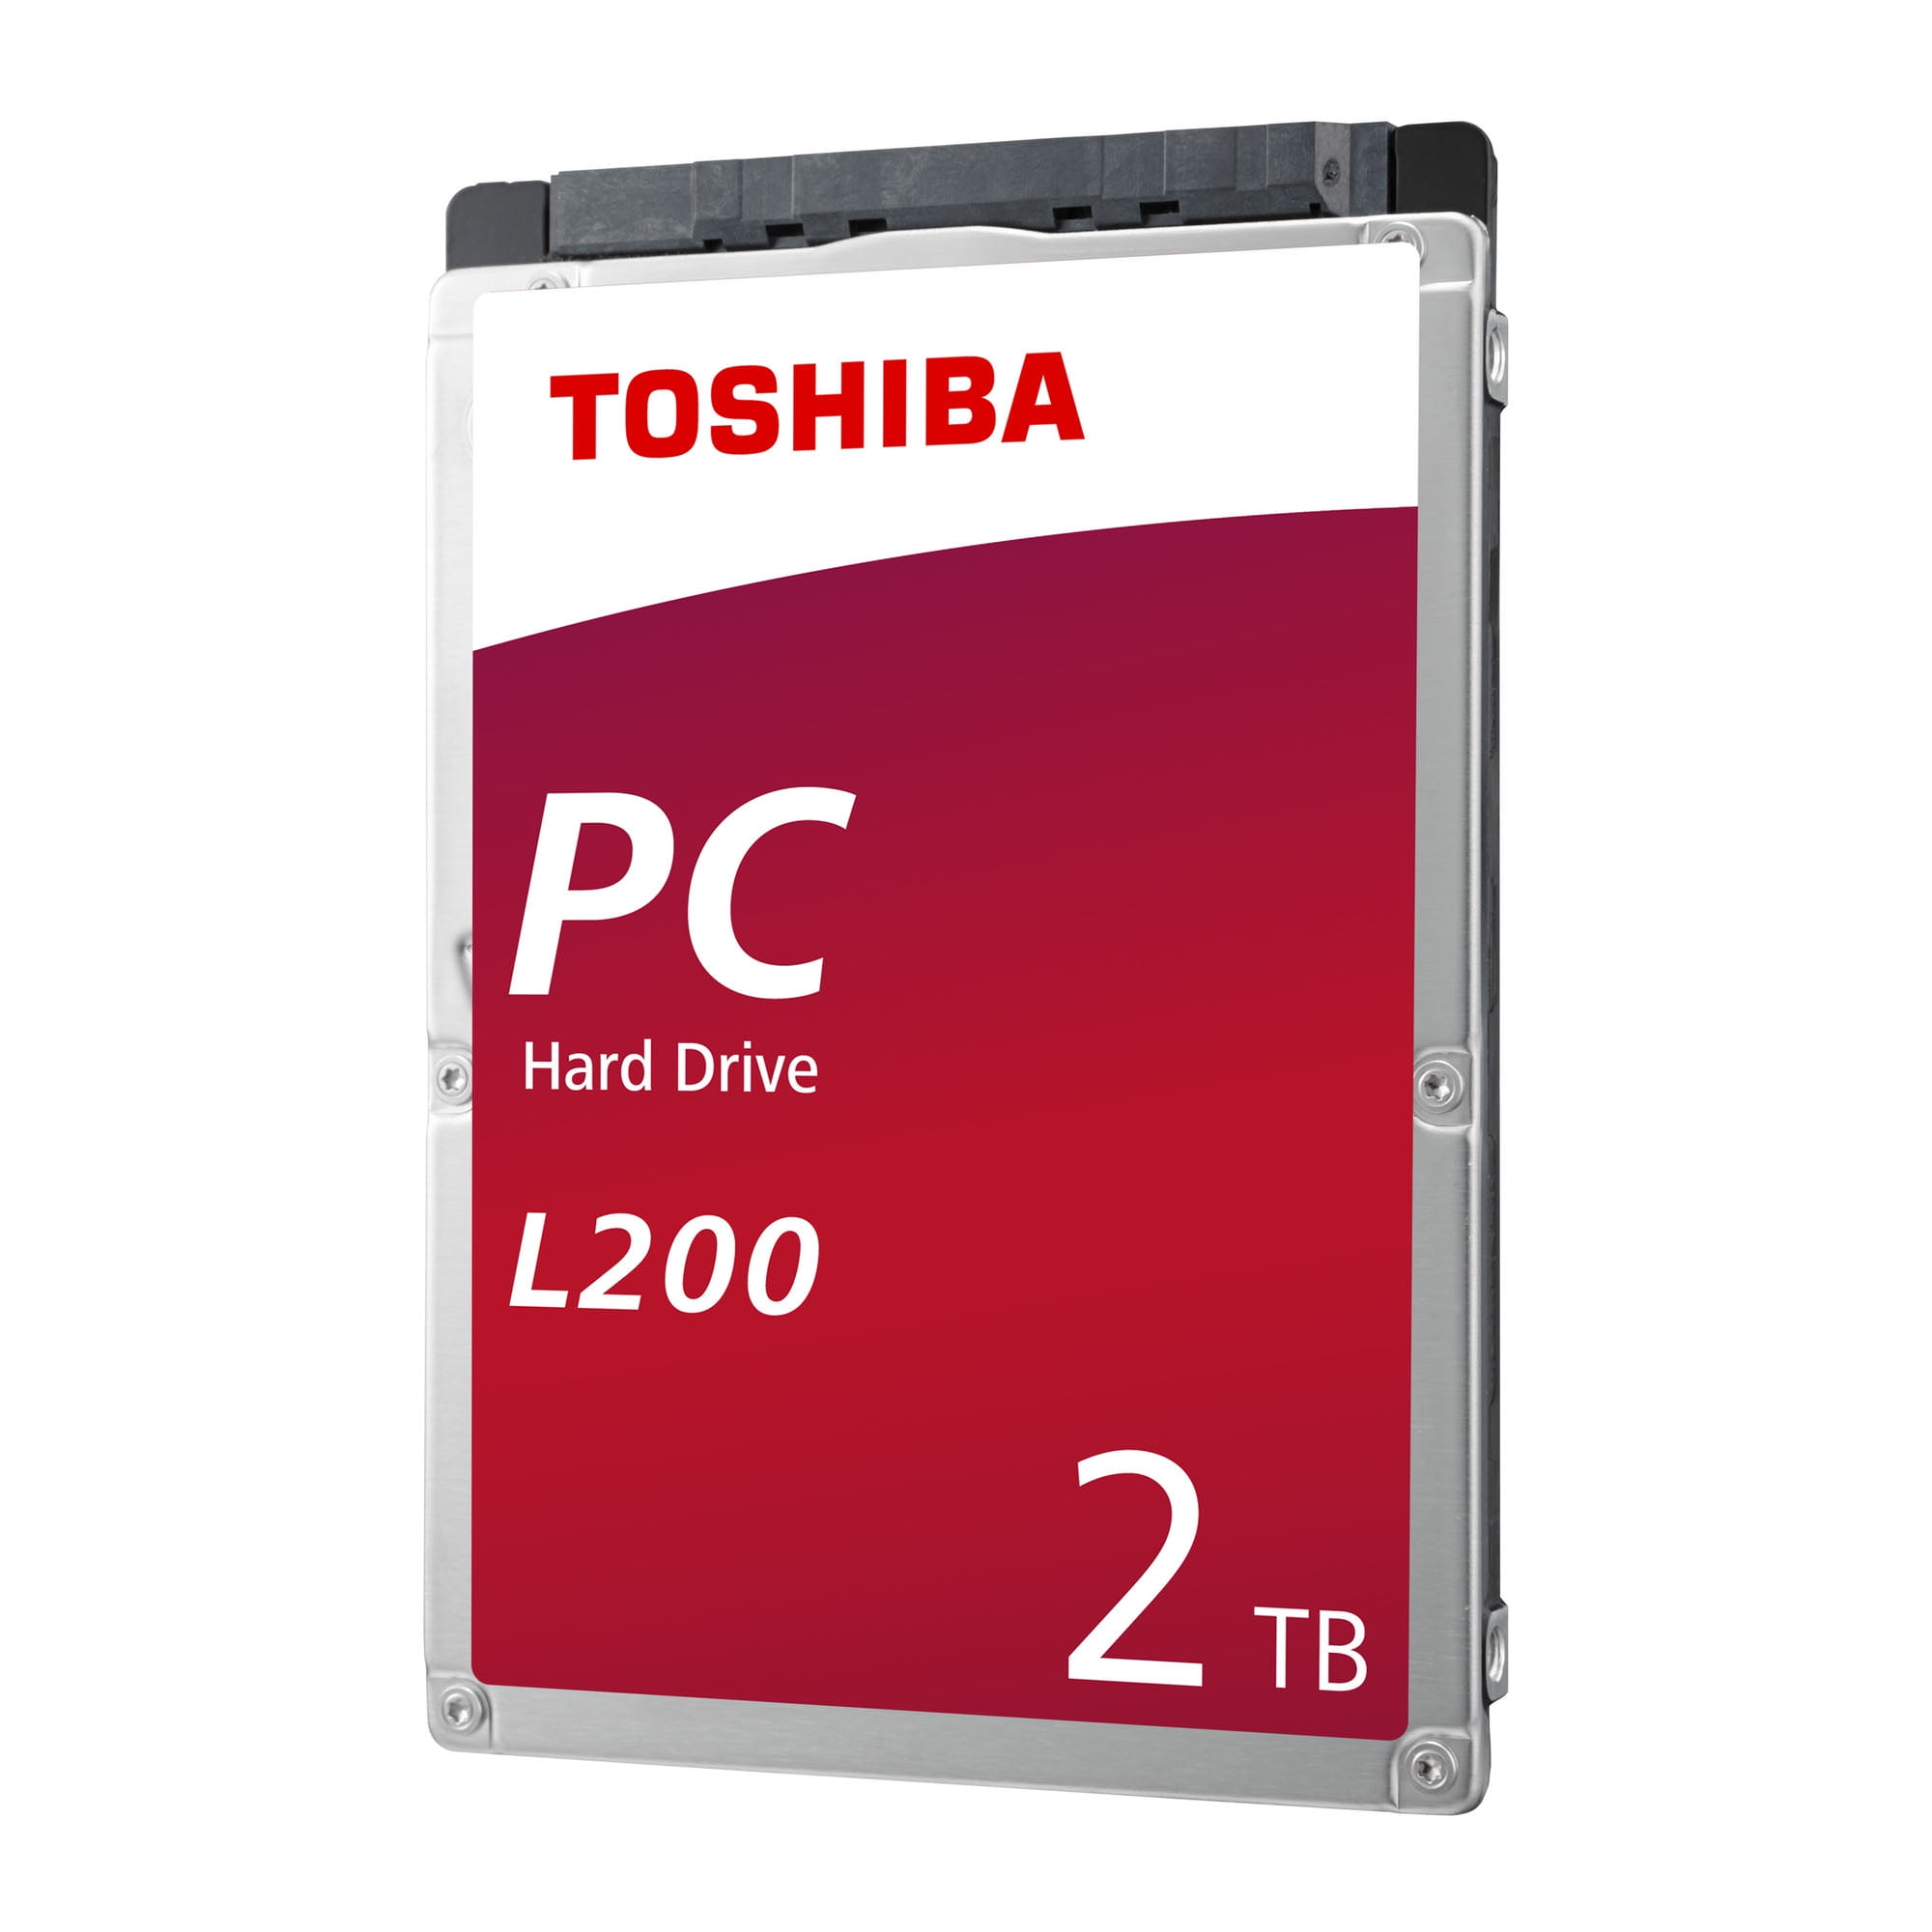 Toshiba Canvio Basics Portable External Hard Drive 4TB 